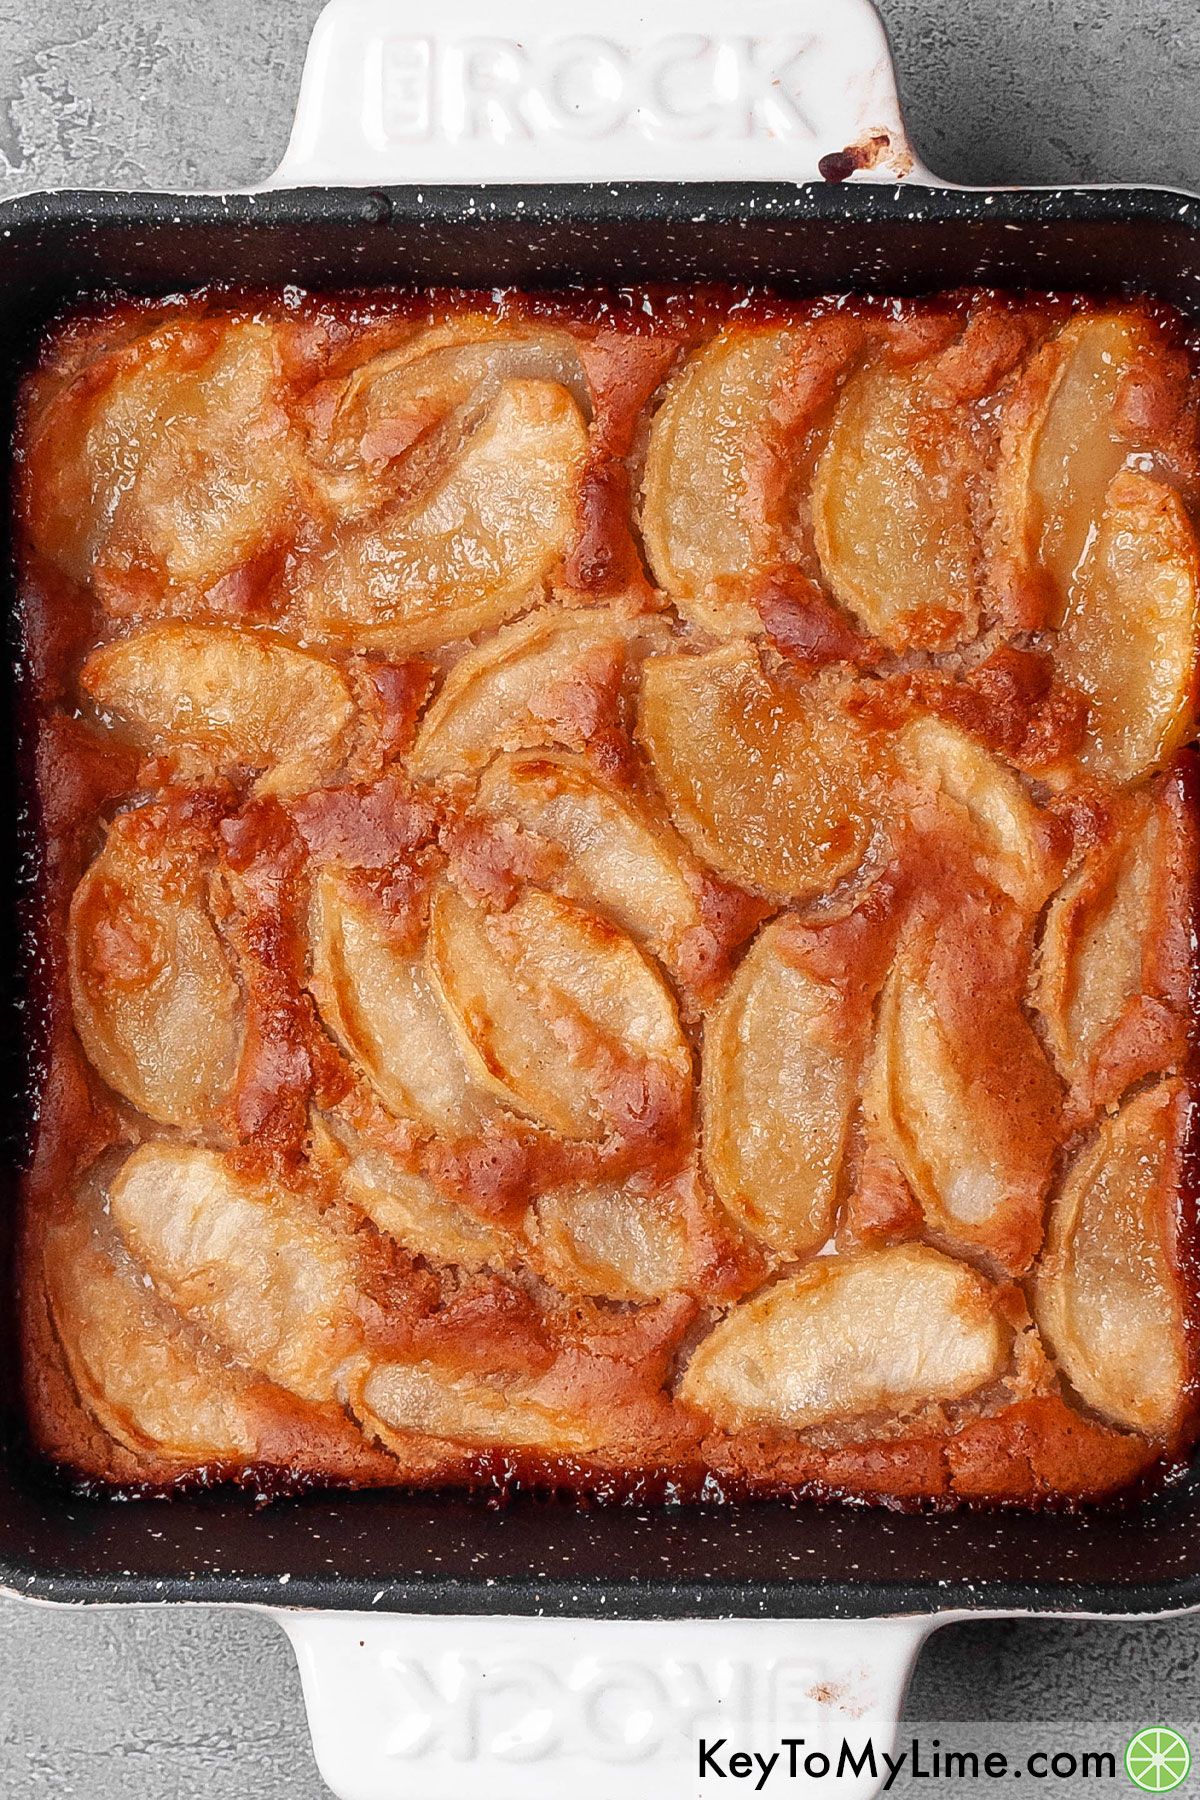 Freshly baking Bisquick apple cobbler with fresh apple slices.